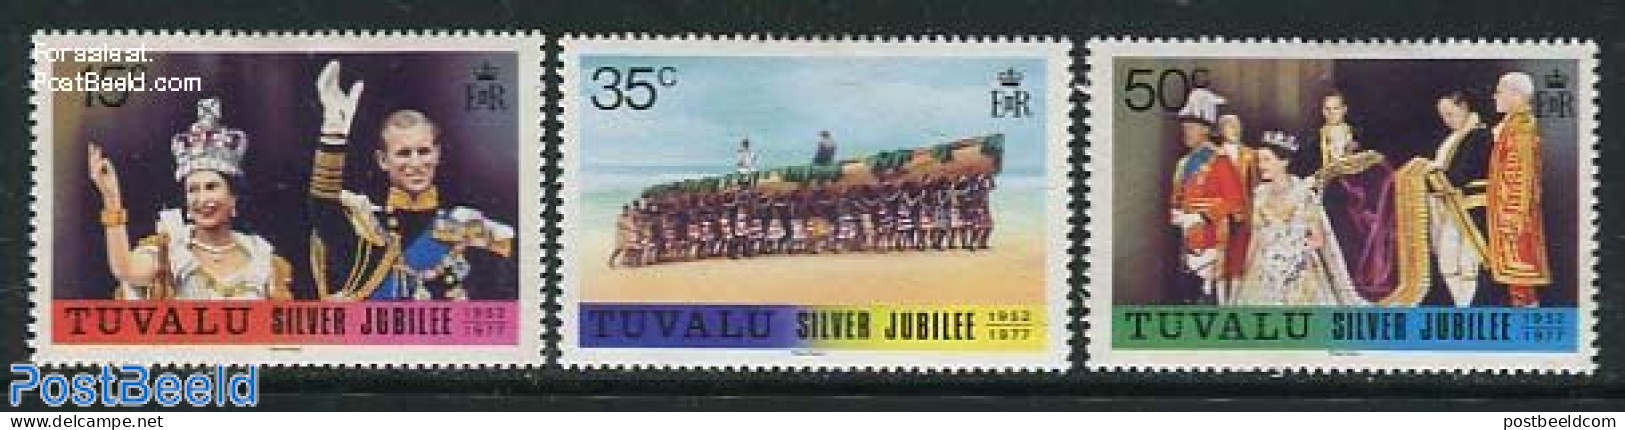 Tuvalu 1977 Silver Jubilee 3v, Mint NH, History - Kings & Queens (Royalty) - Königshäuser, Adel